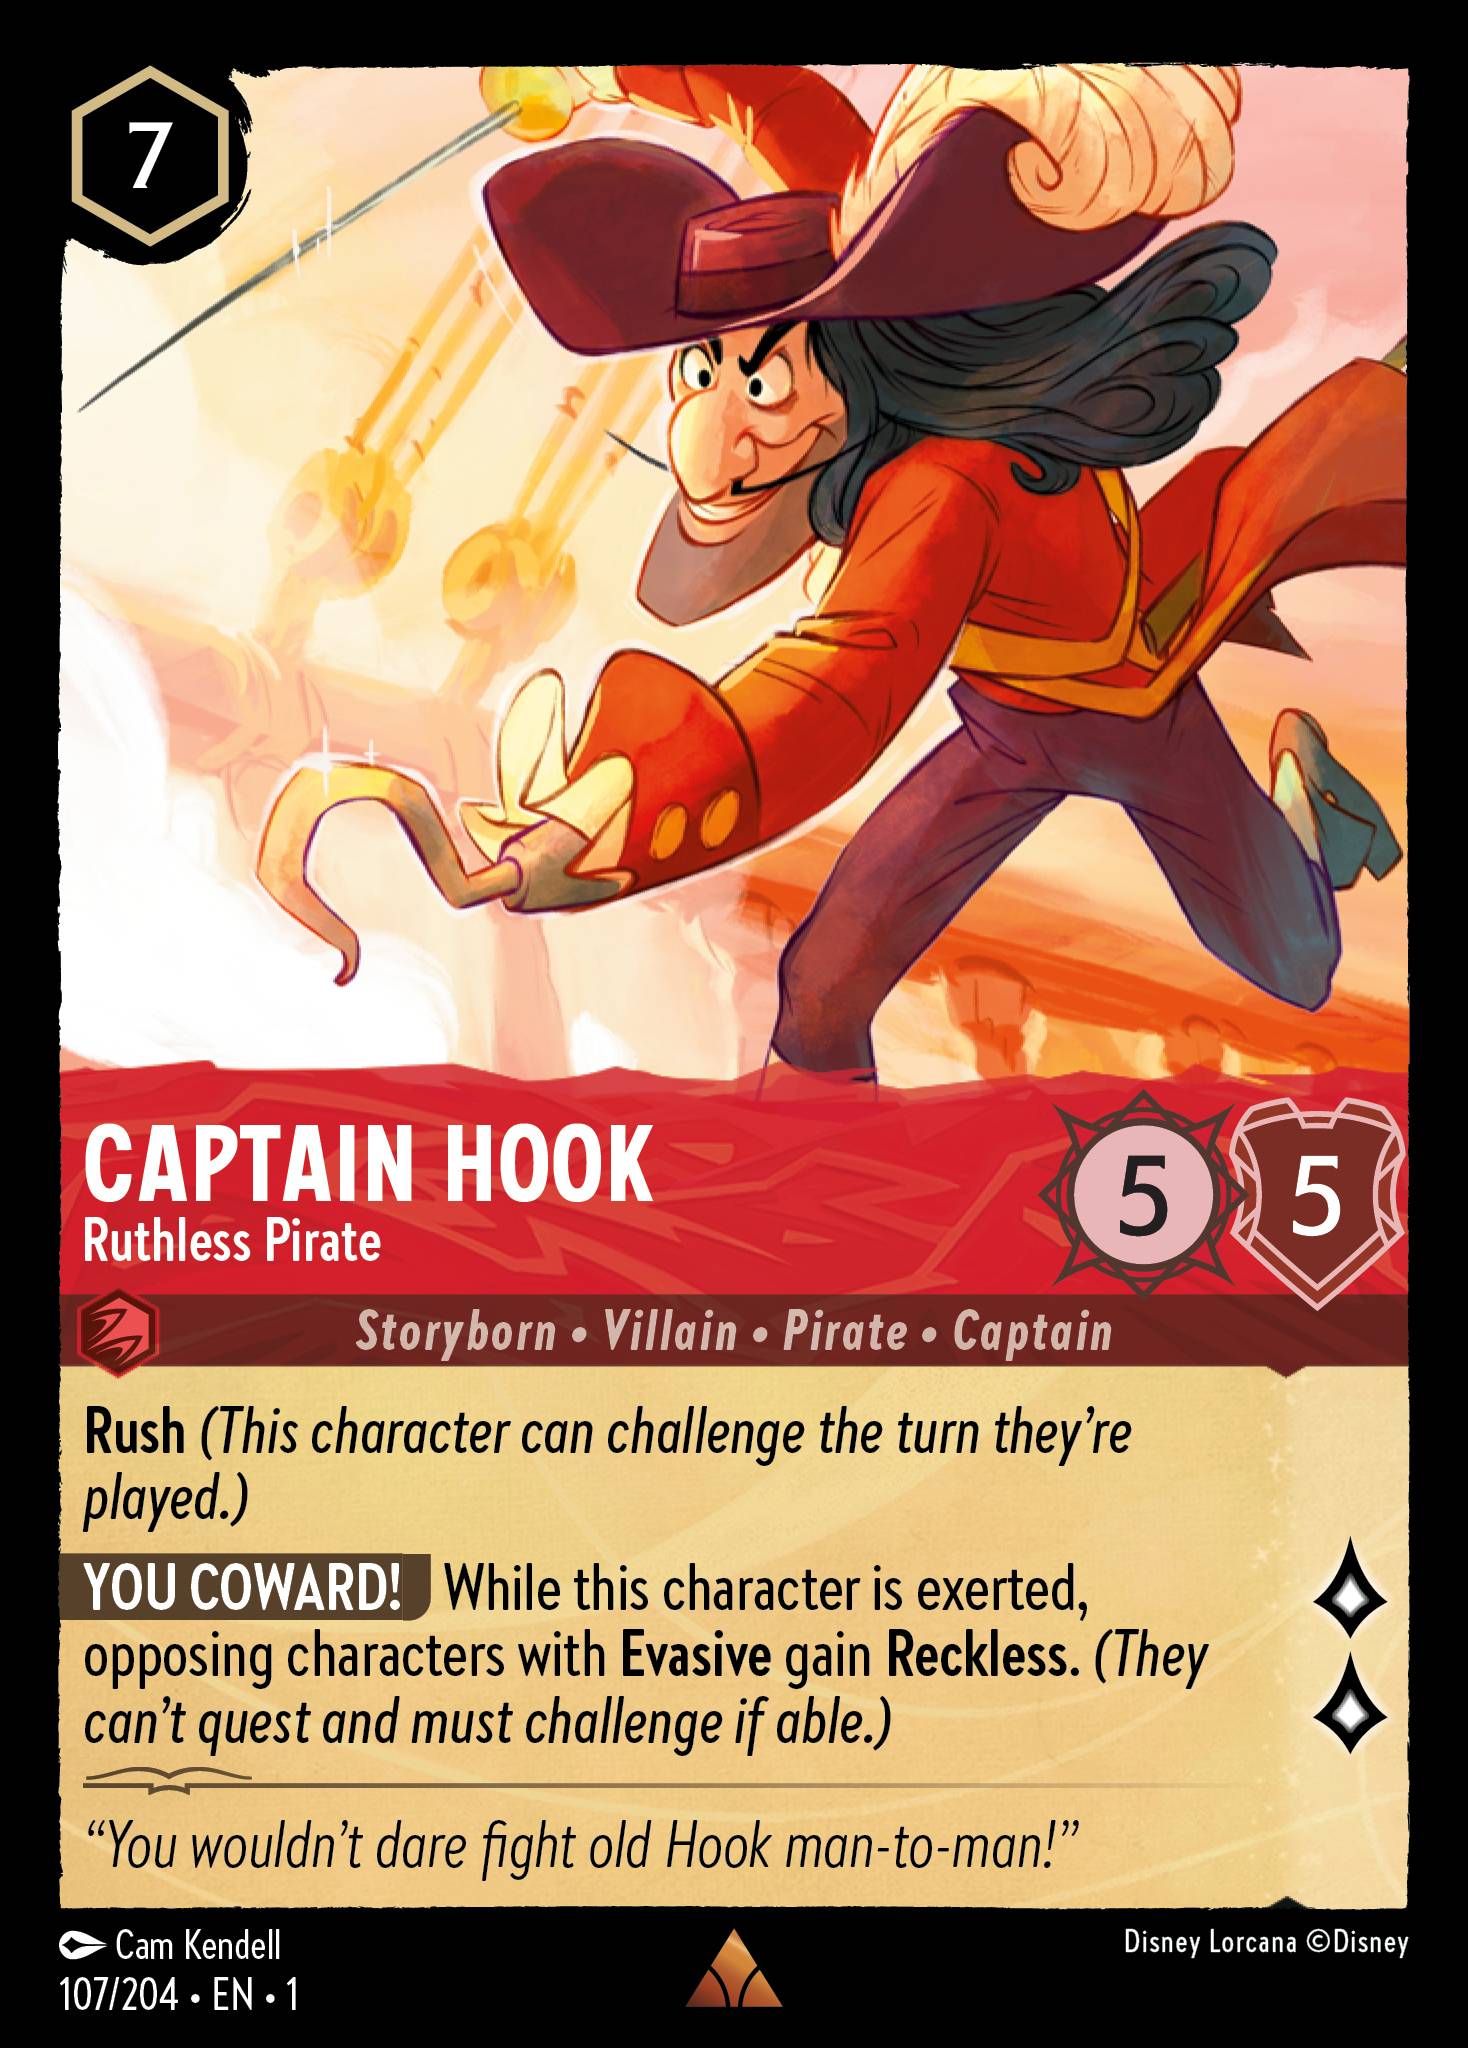 Captain Hook's Rapier - Into the Inklands - Disney Lorcana